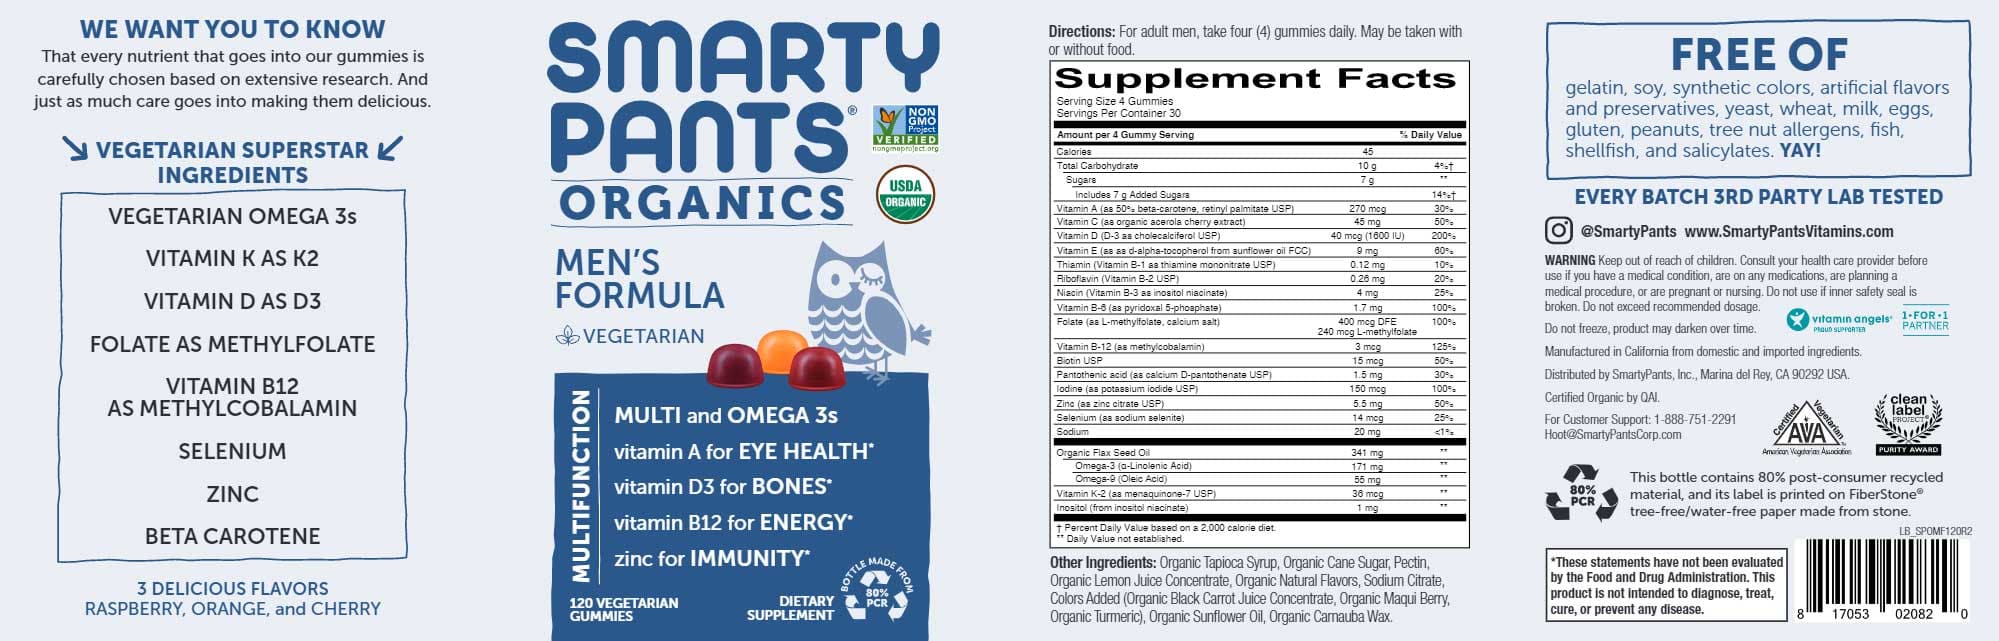 SmartyPants Men's Organic Formula Ingredients